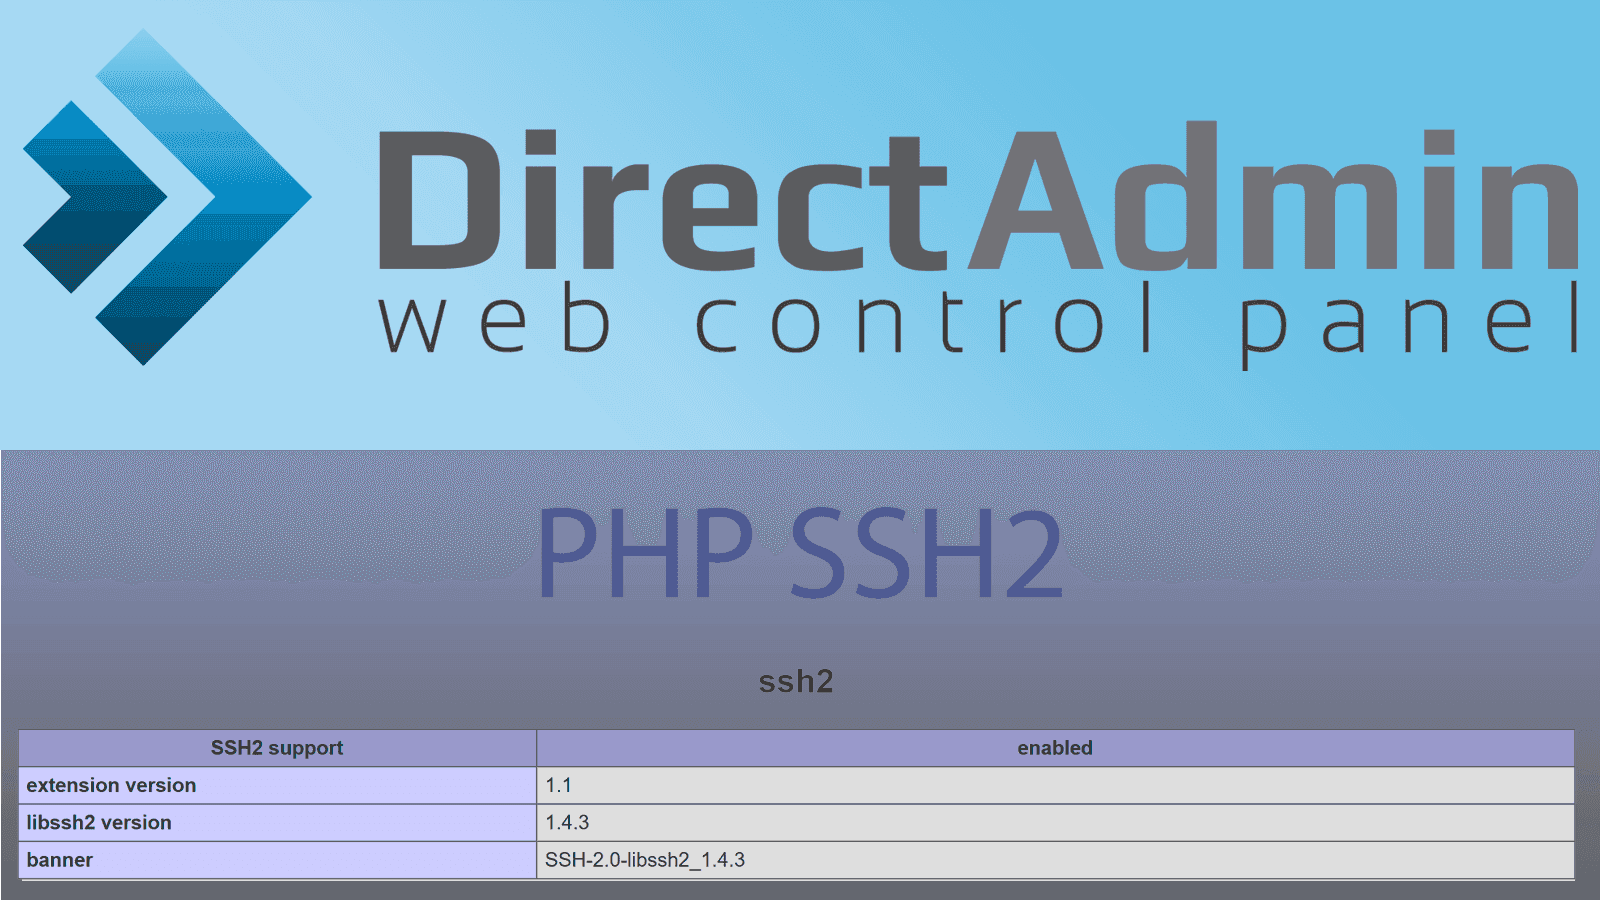 DirectAdmin PHP SSH2